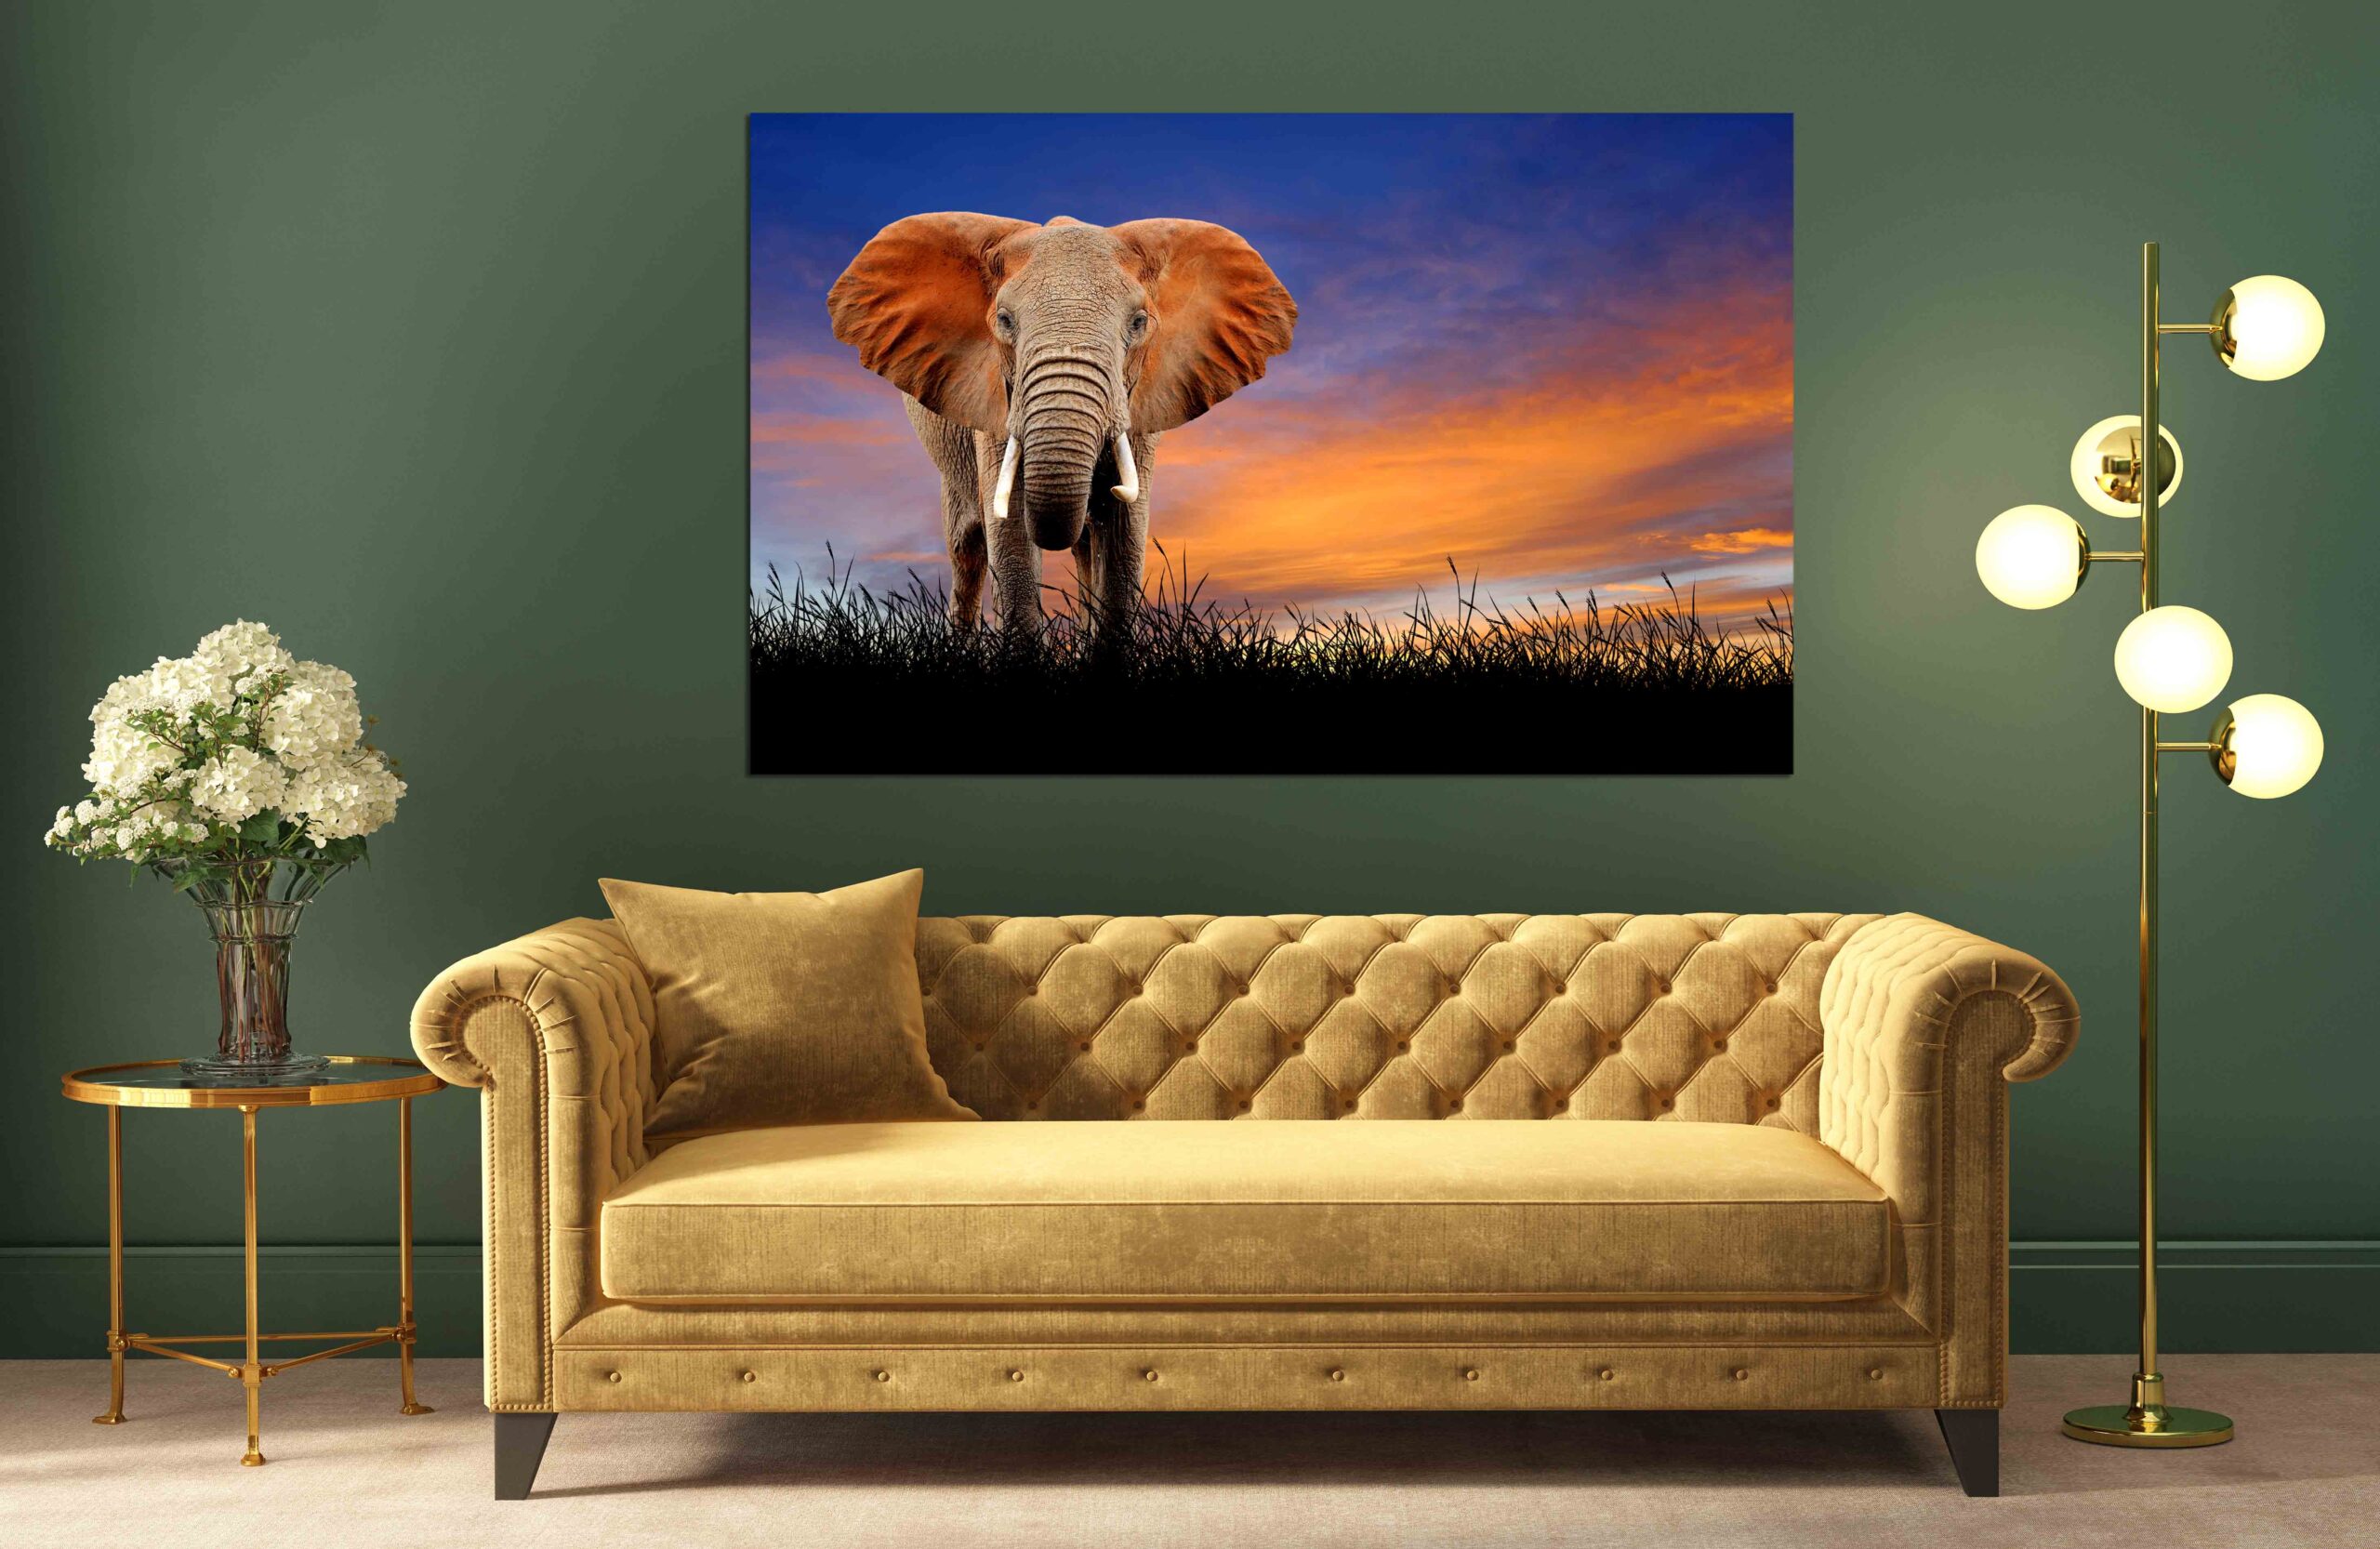 Canvas Print Elephant of sunset